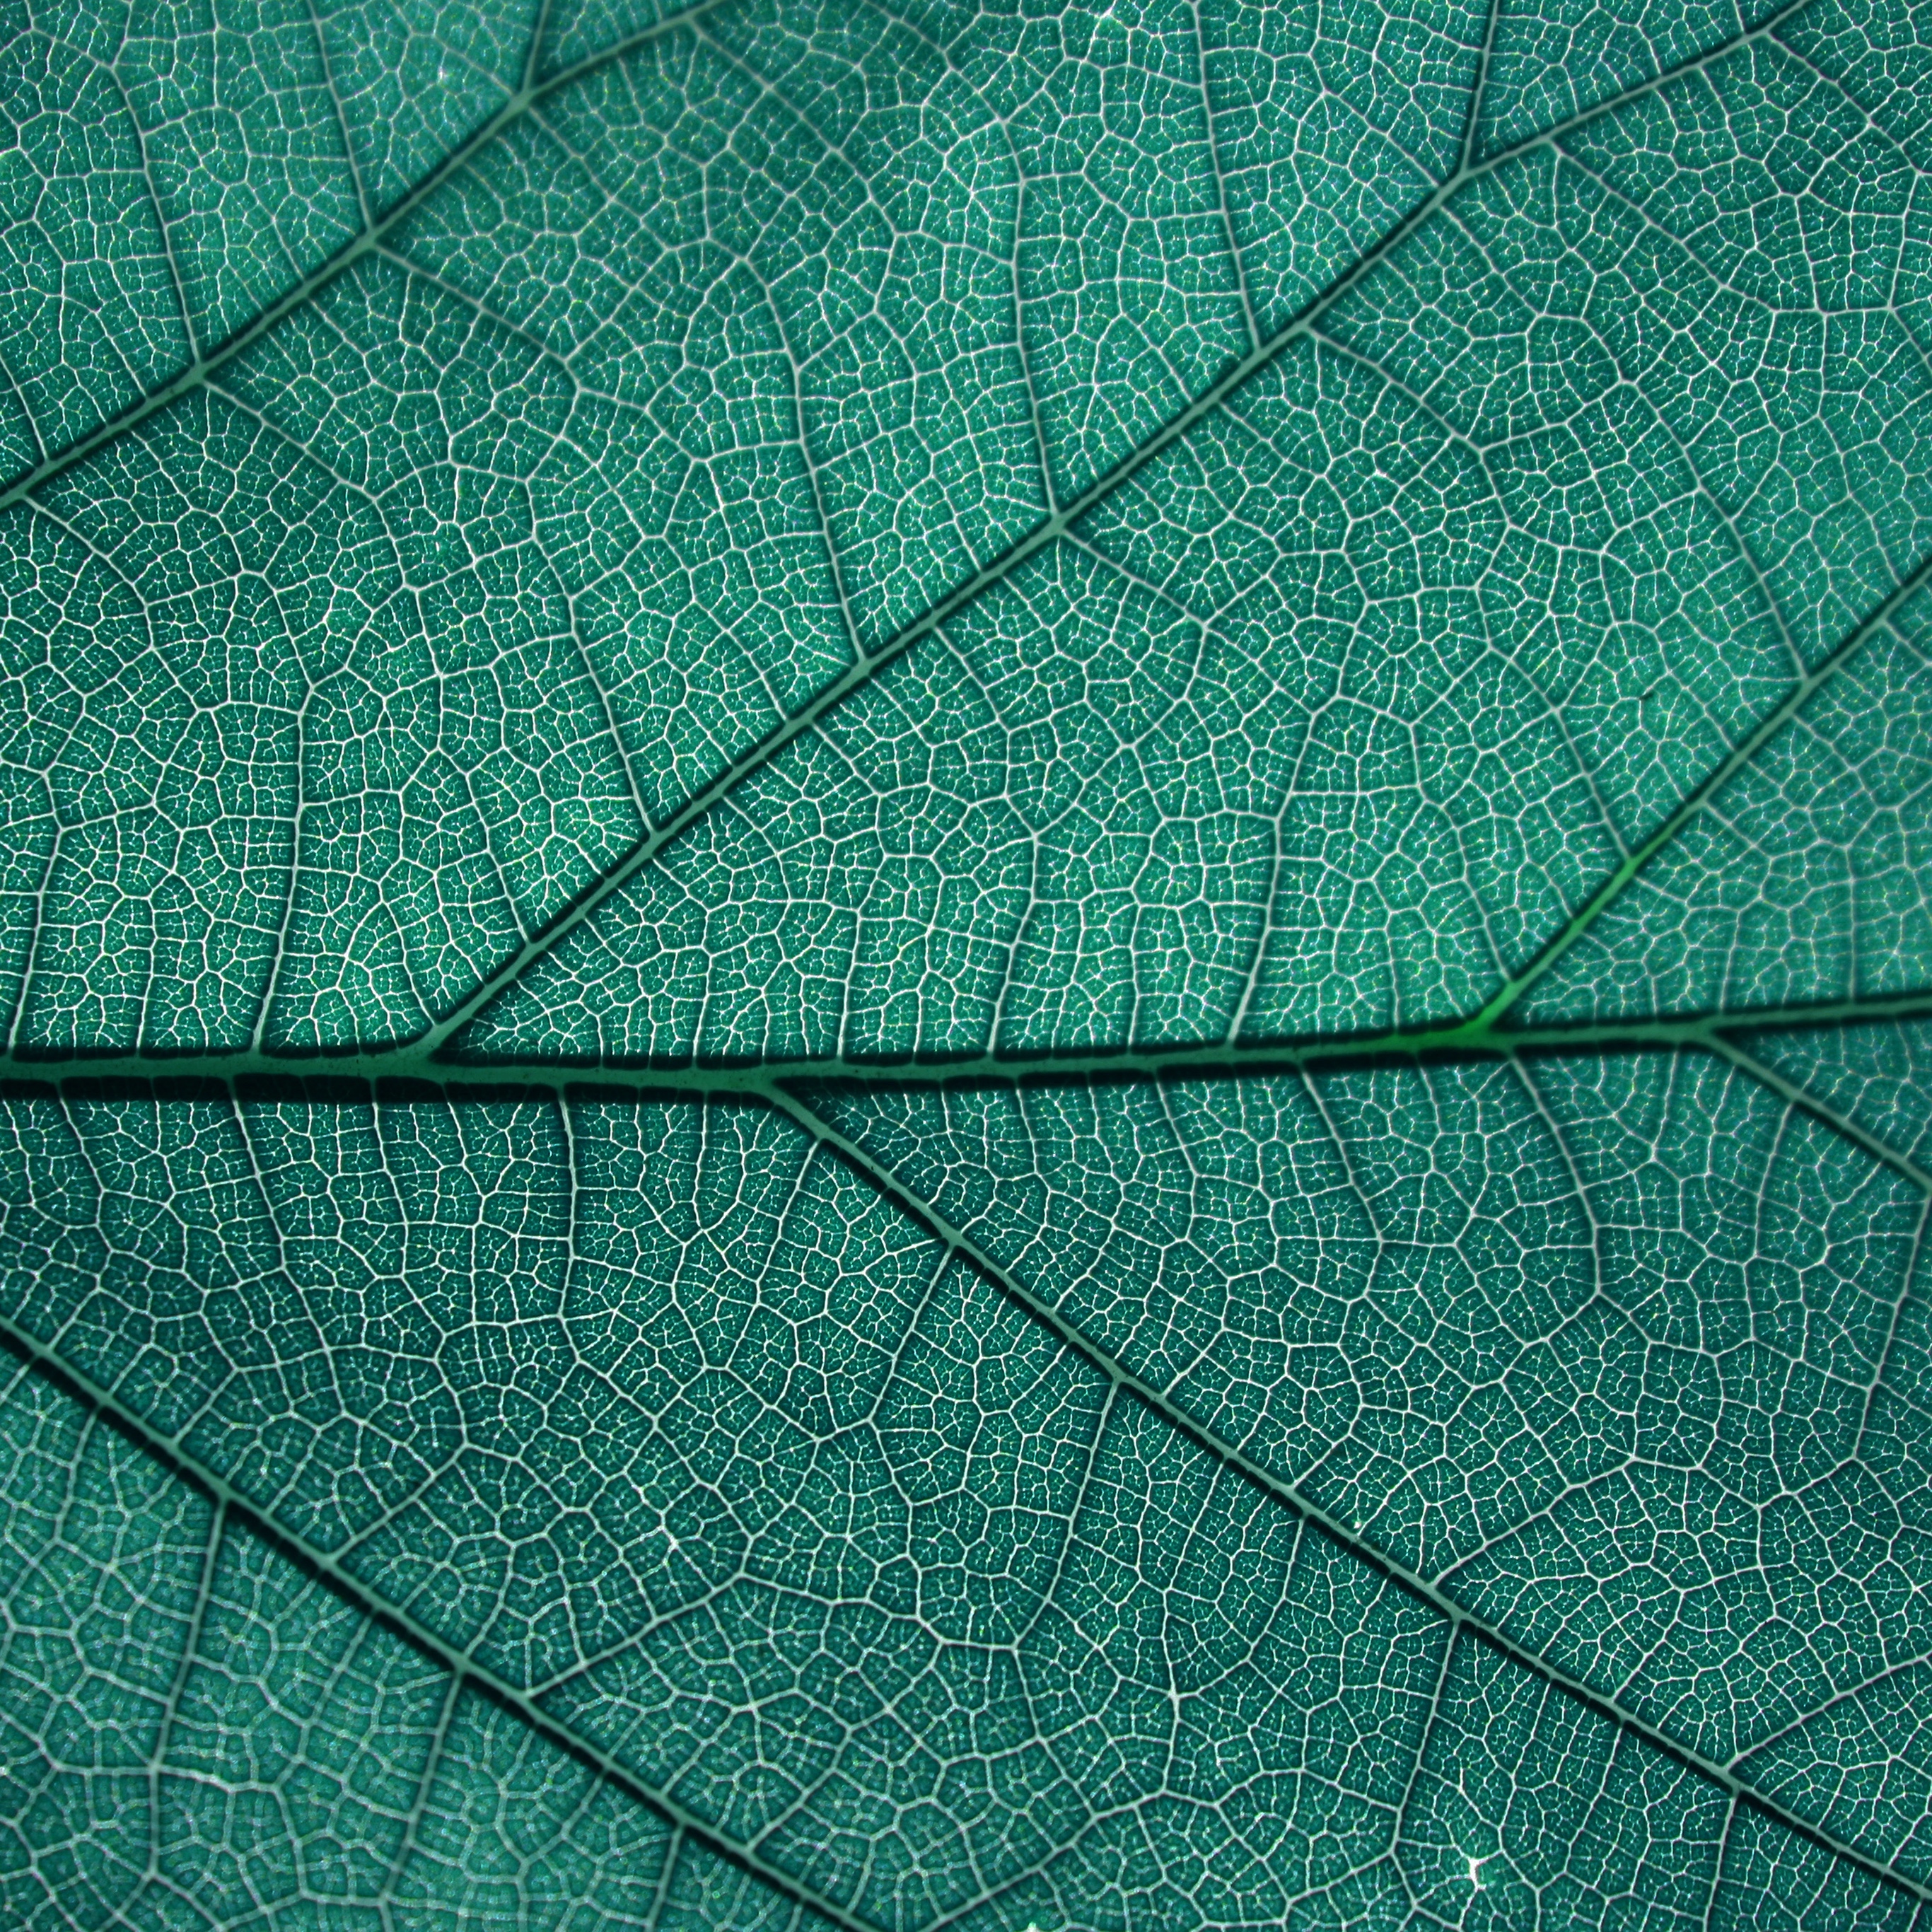 Wallpaper of a leaf